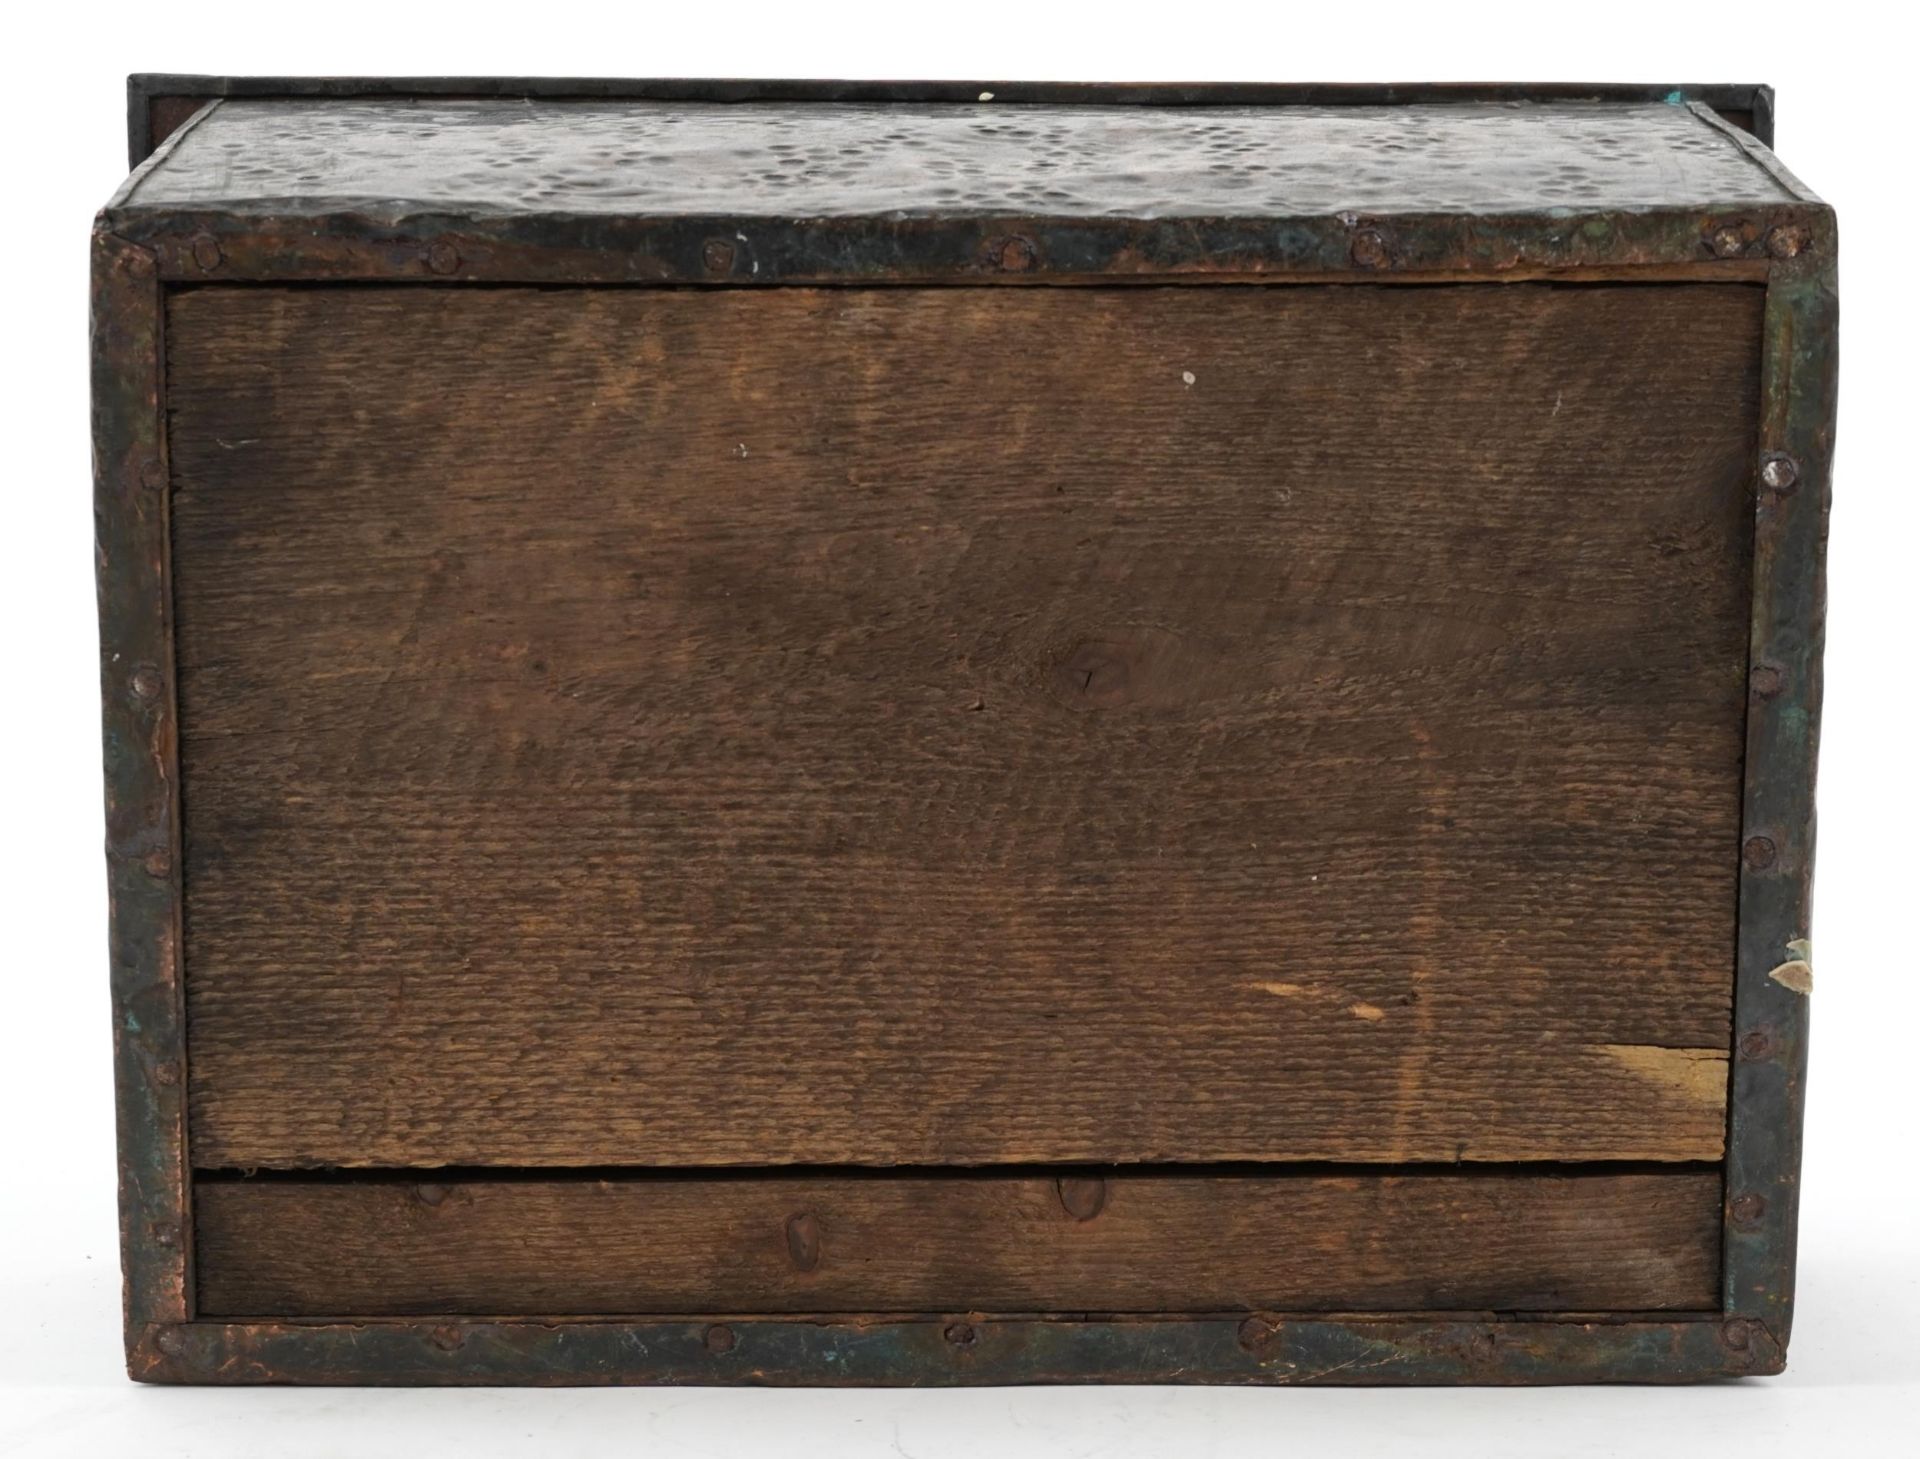 Art Nouveau beaten copper slipper box with sloped front, 19cm H x 36.5cm W x 26cm D : For further - Image 3 of 3